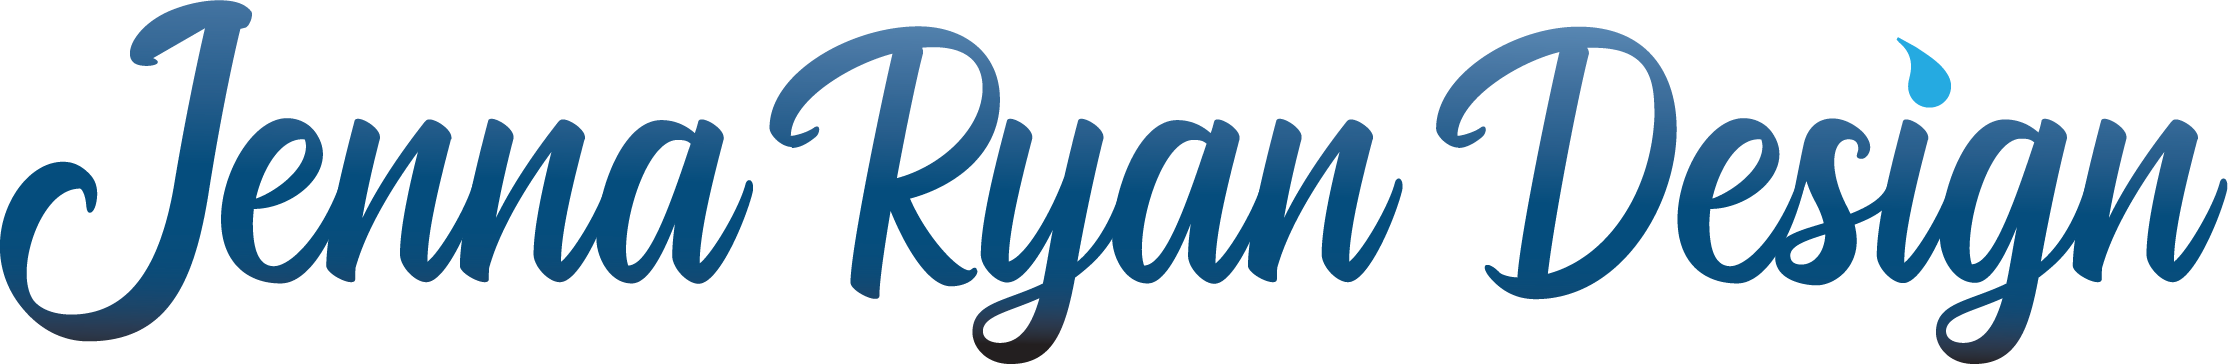 Jenna Ryan design logo